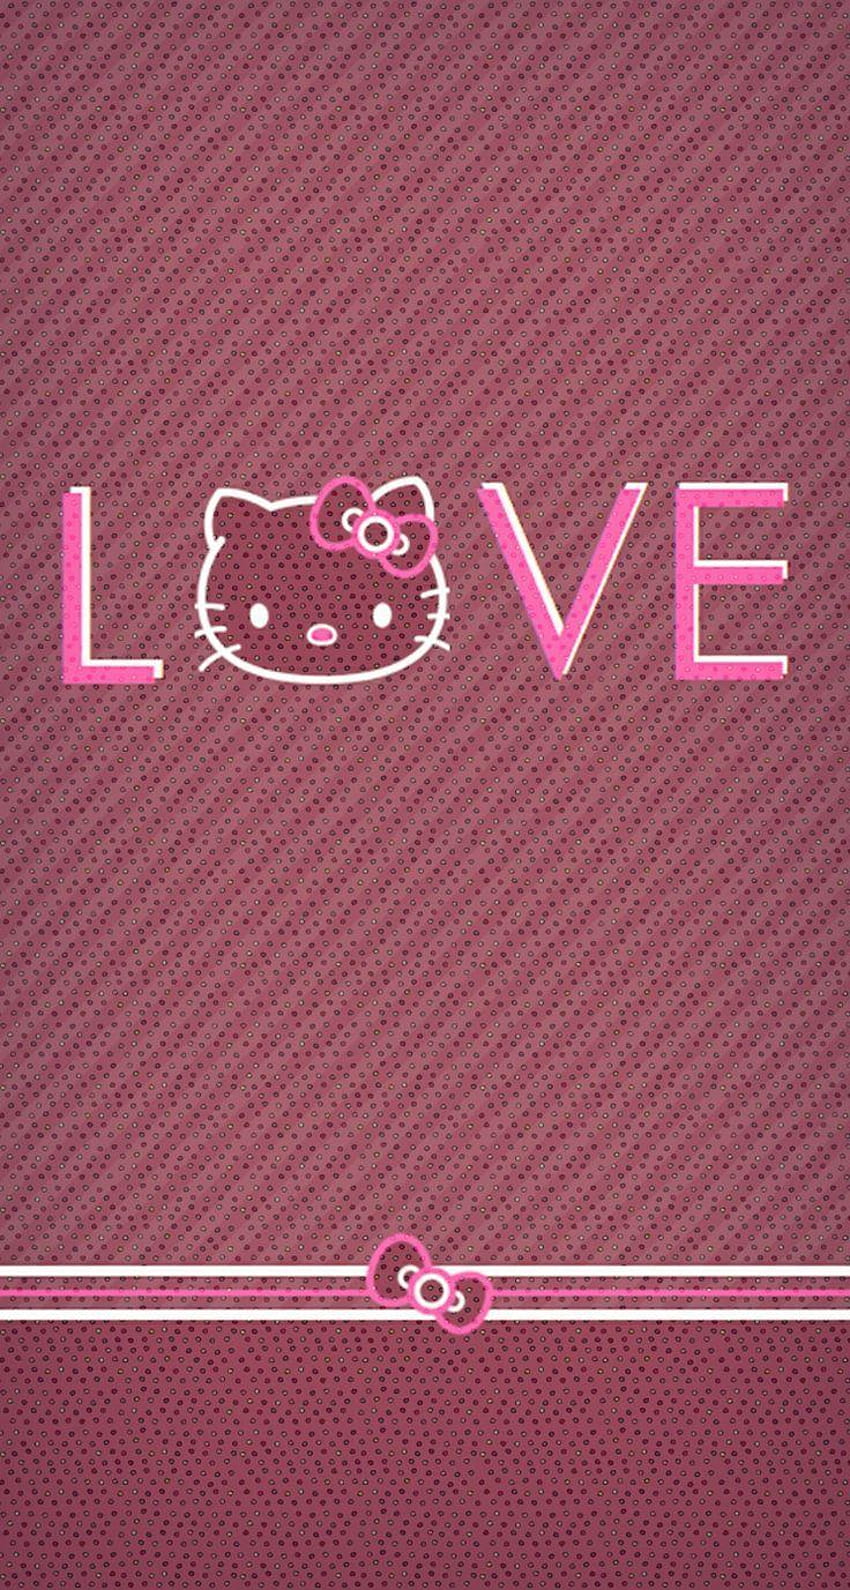 neon hello kitty  widgetopia homescreen widgets for iPhone  iPad  Android